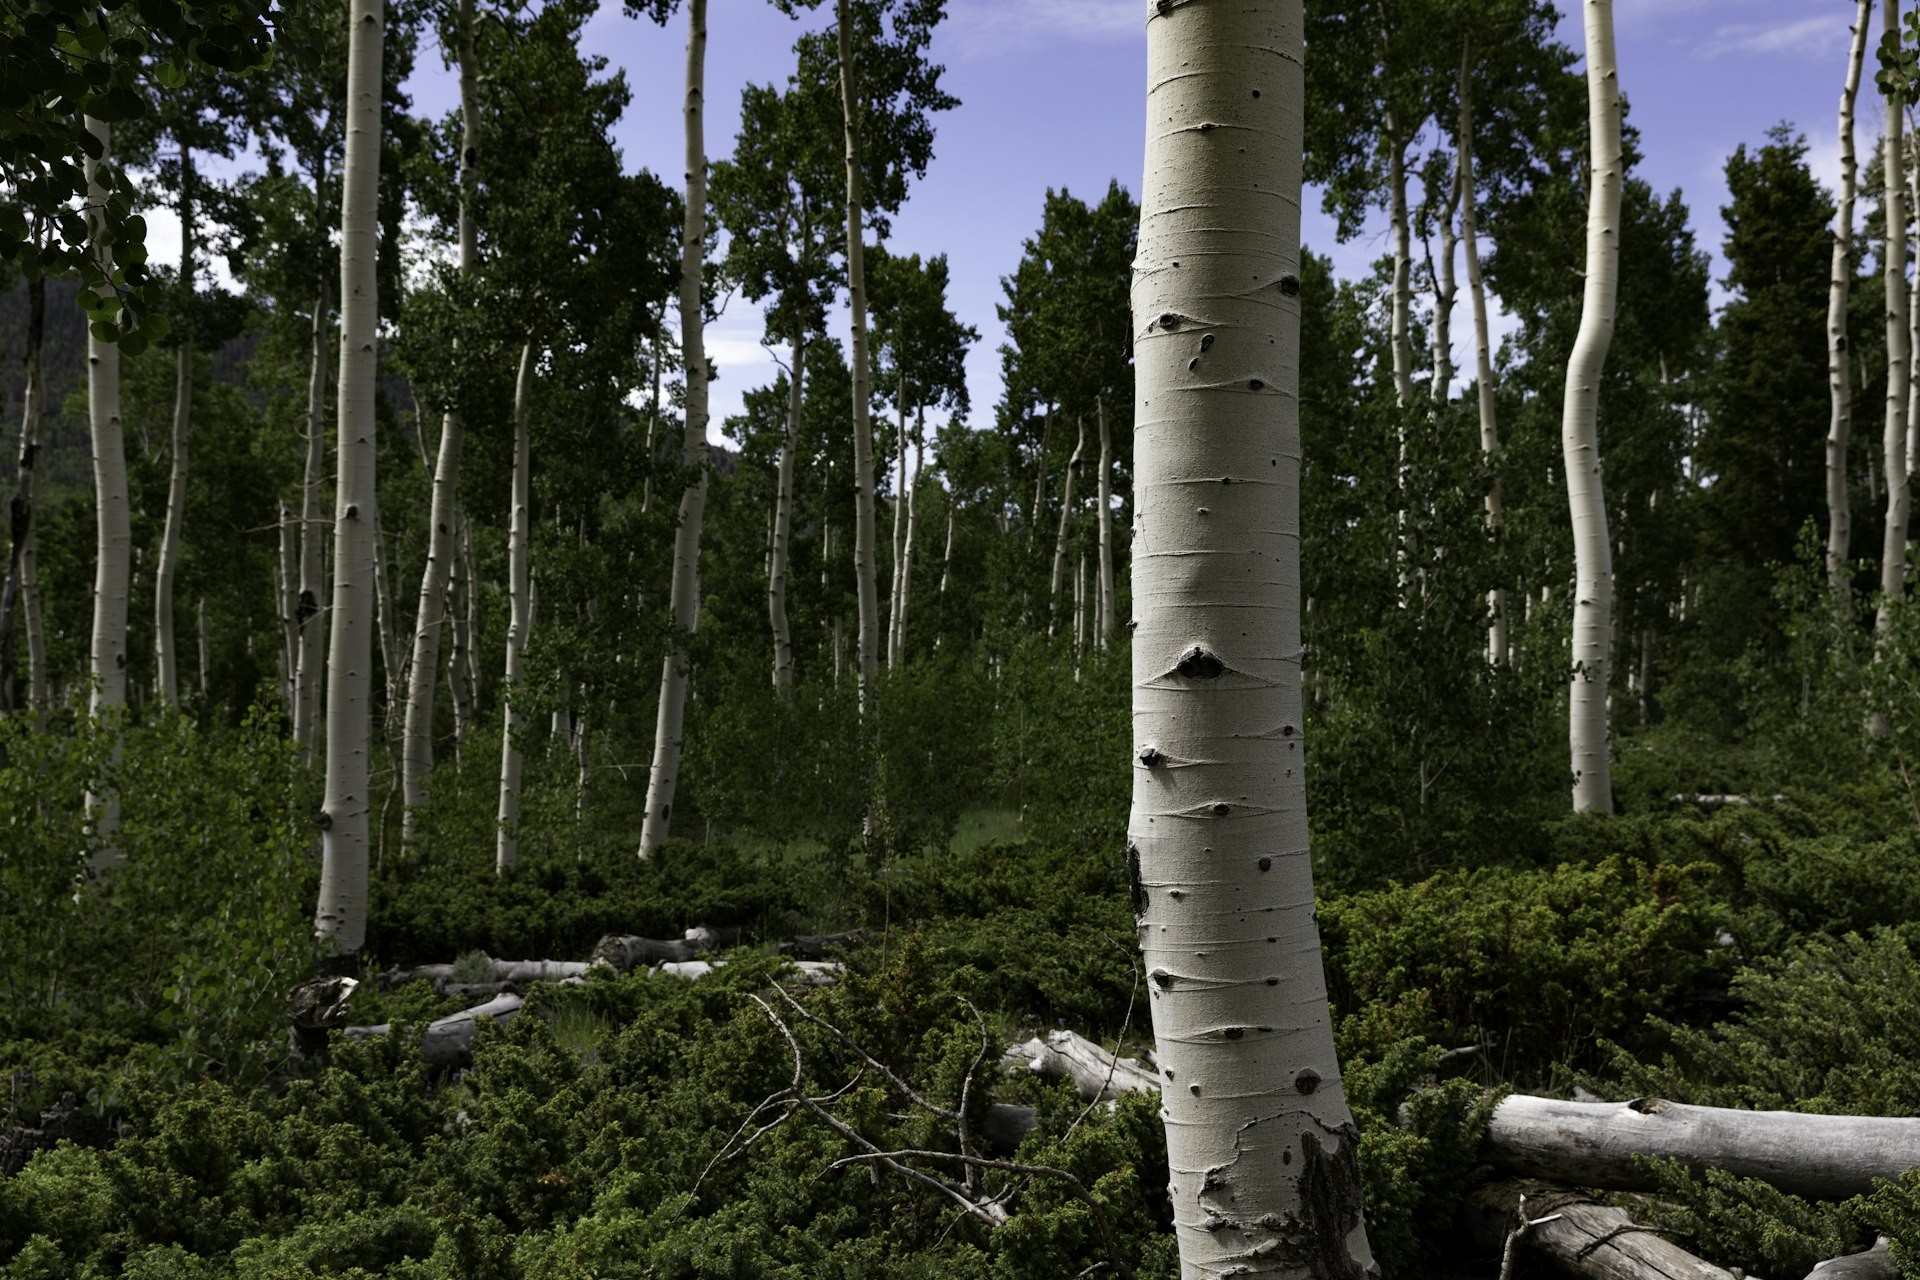 Aspen Trees in the Pando Clone near Fishlake Utah